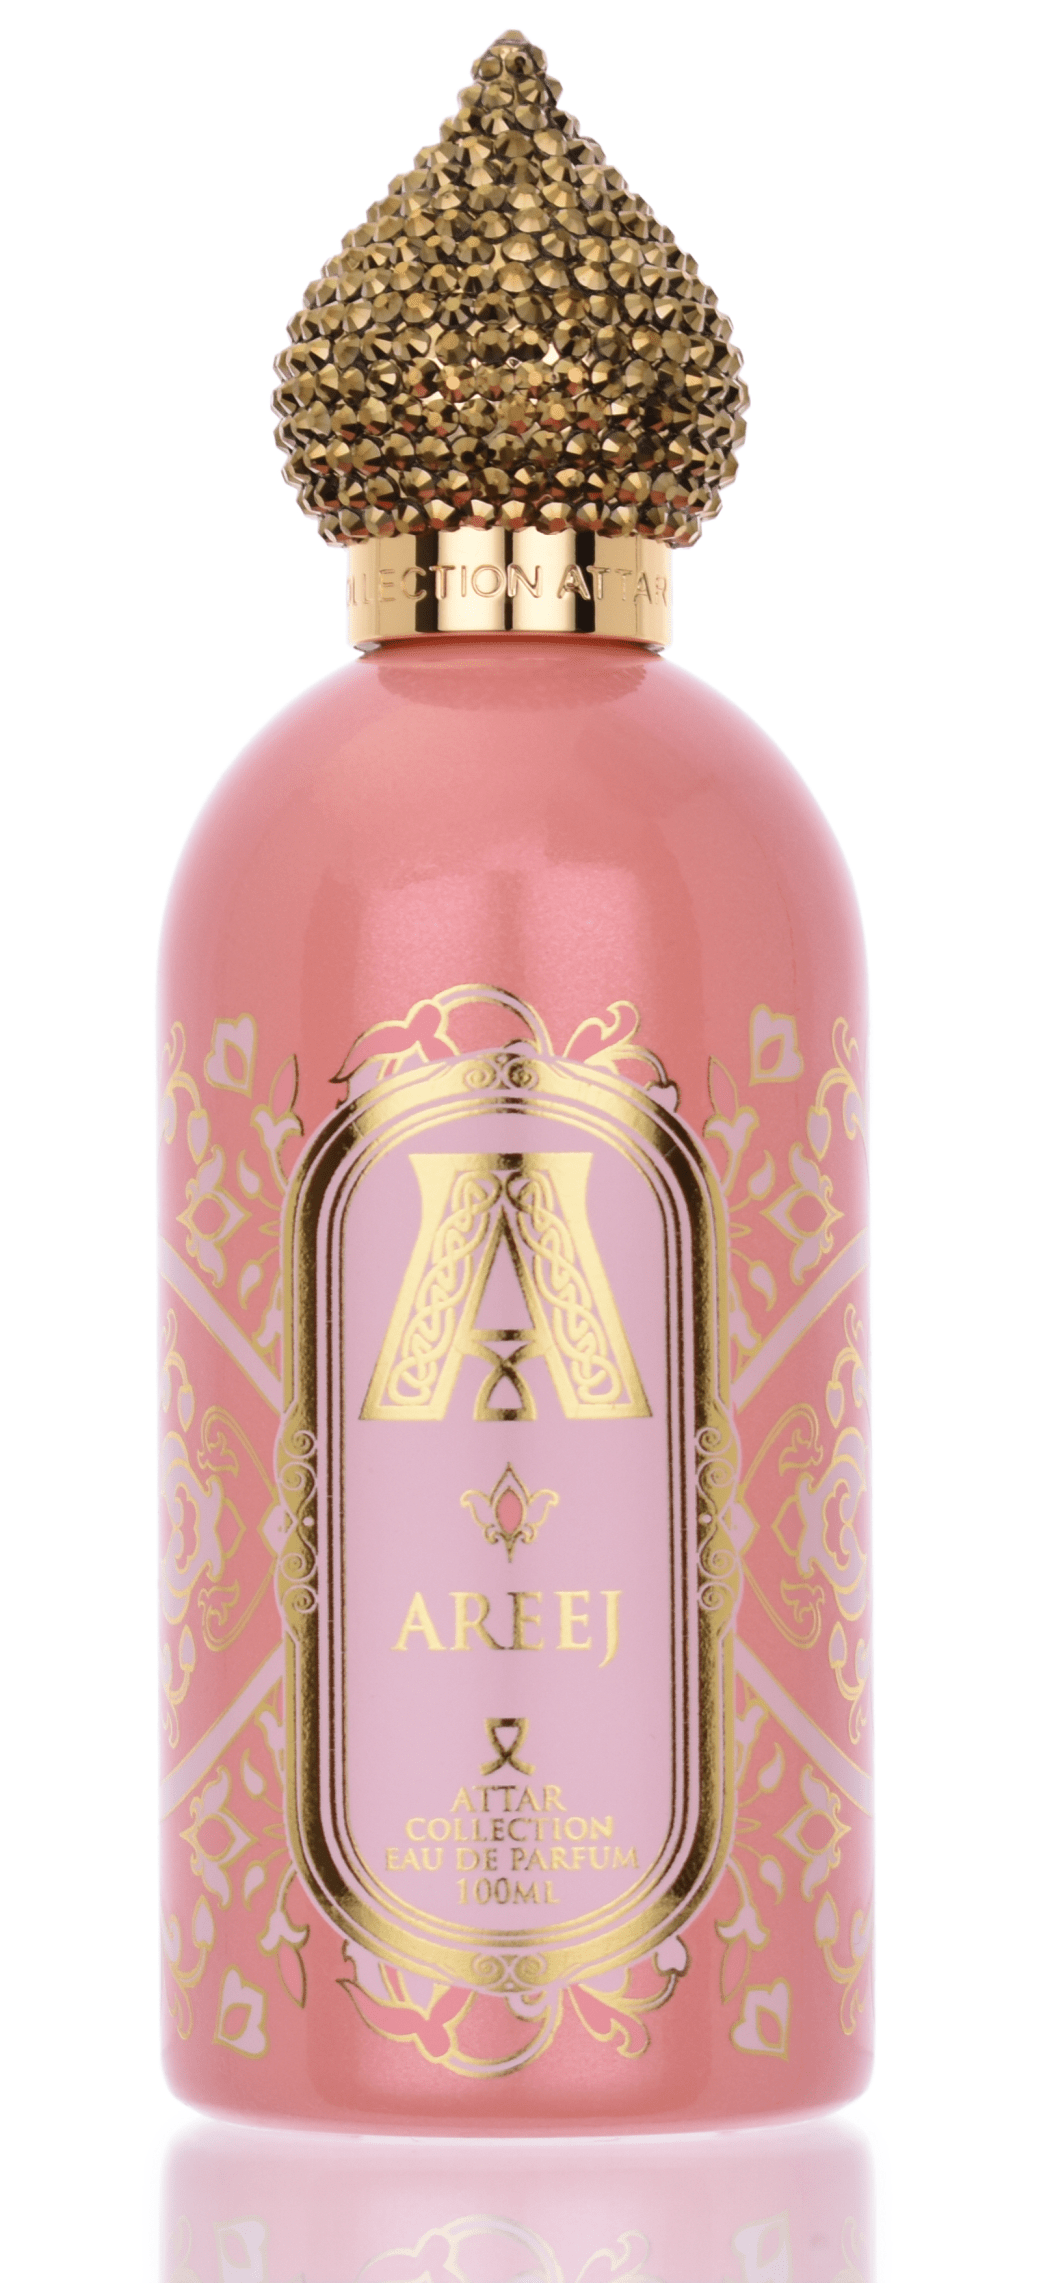 Attar Collection Areej 100 ml Eau de Parfum  